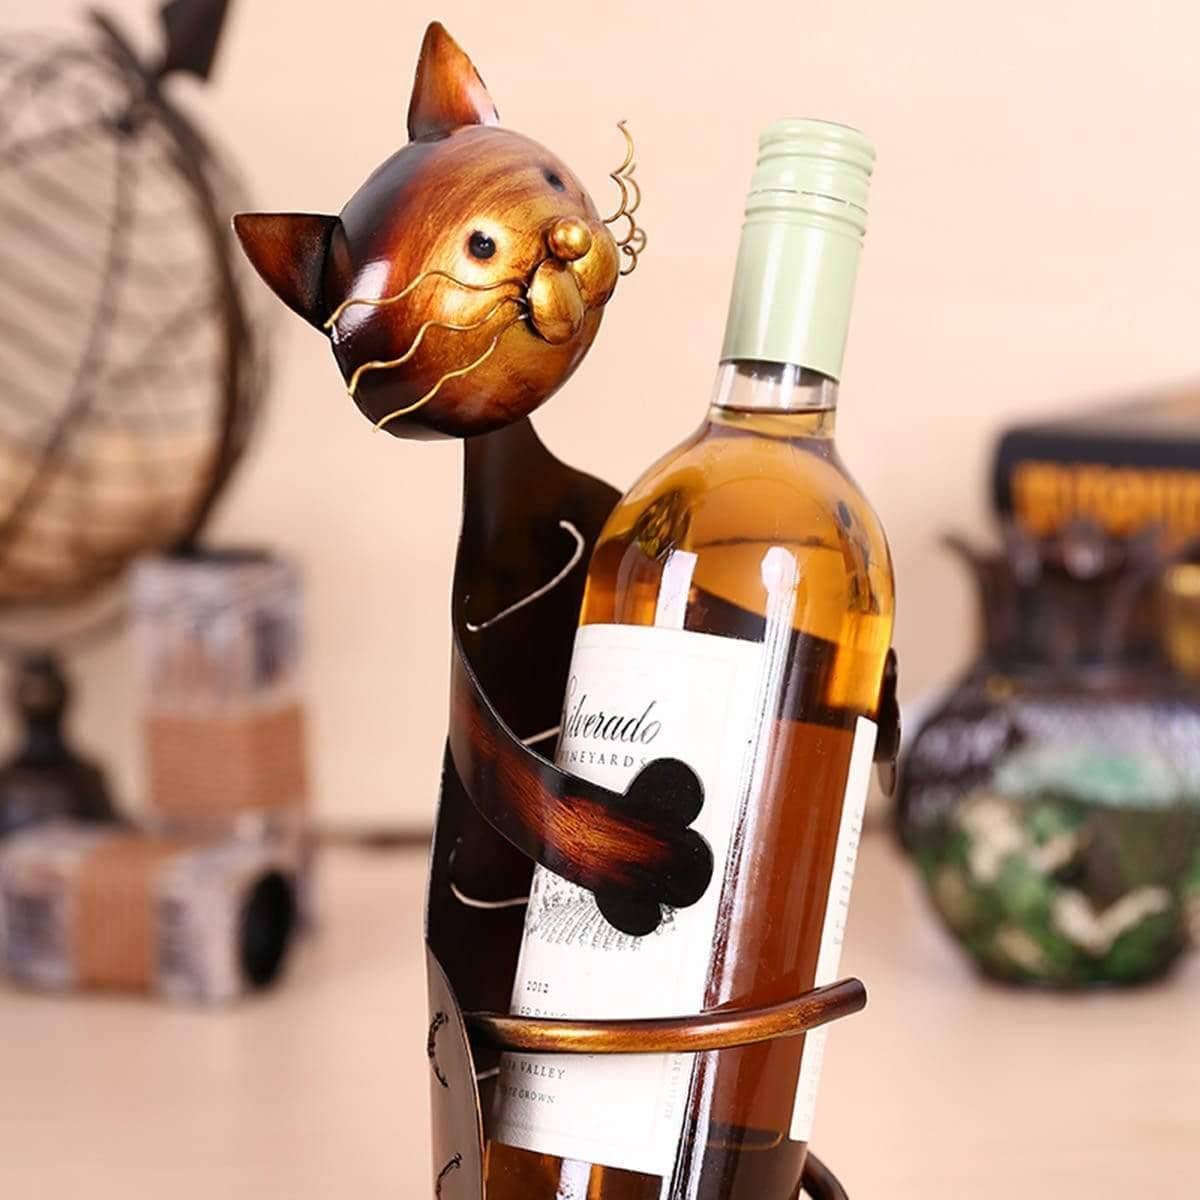 Cat Hug Wine Bottle Holder Rack - Cozy Up with Your Favorite Wine